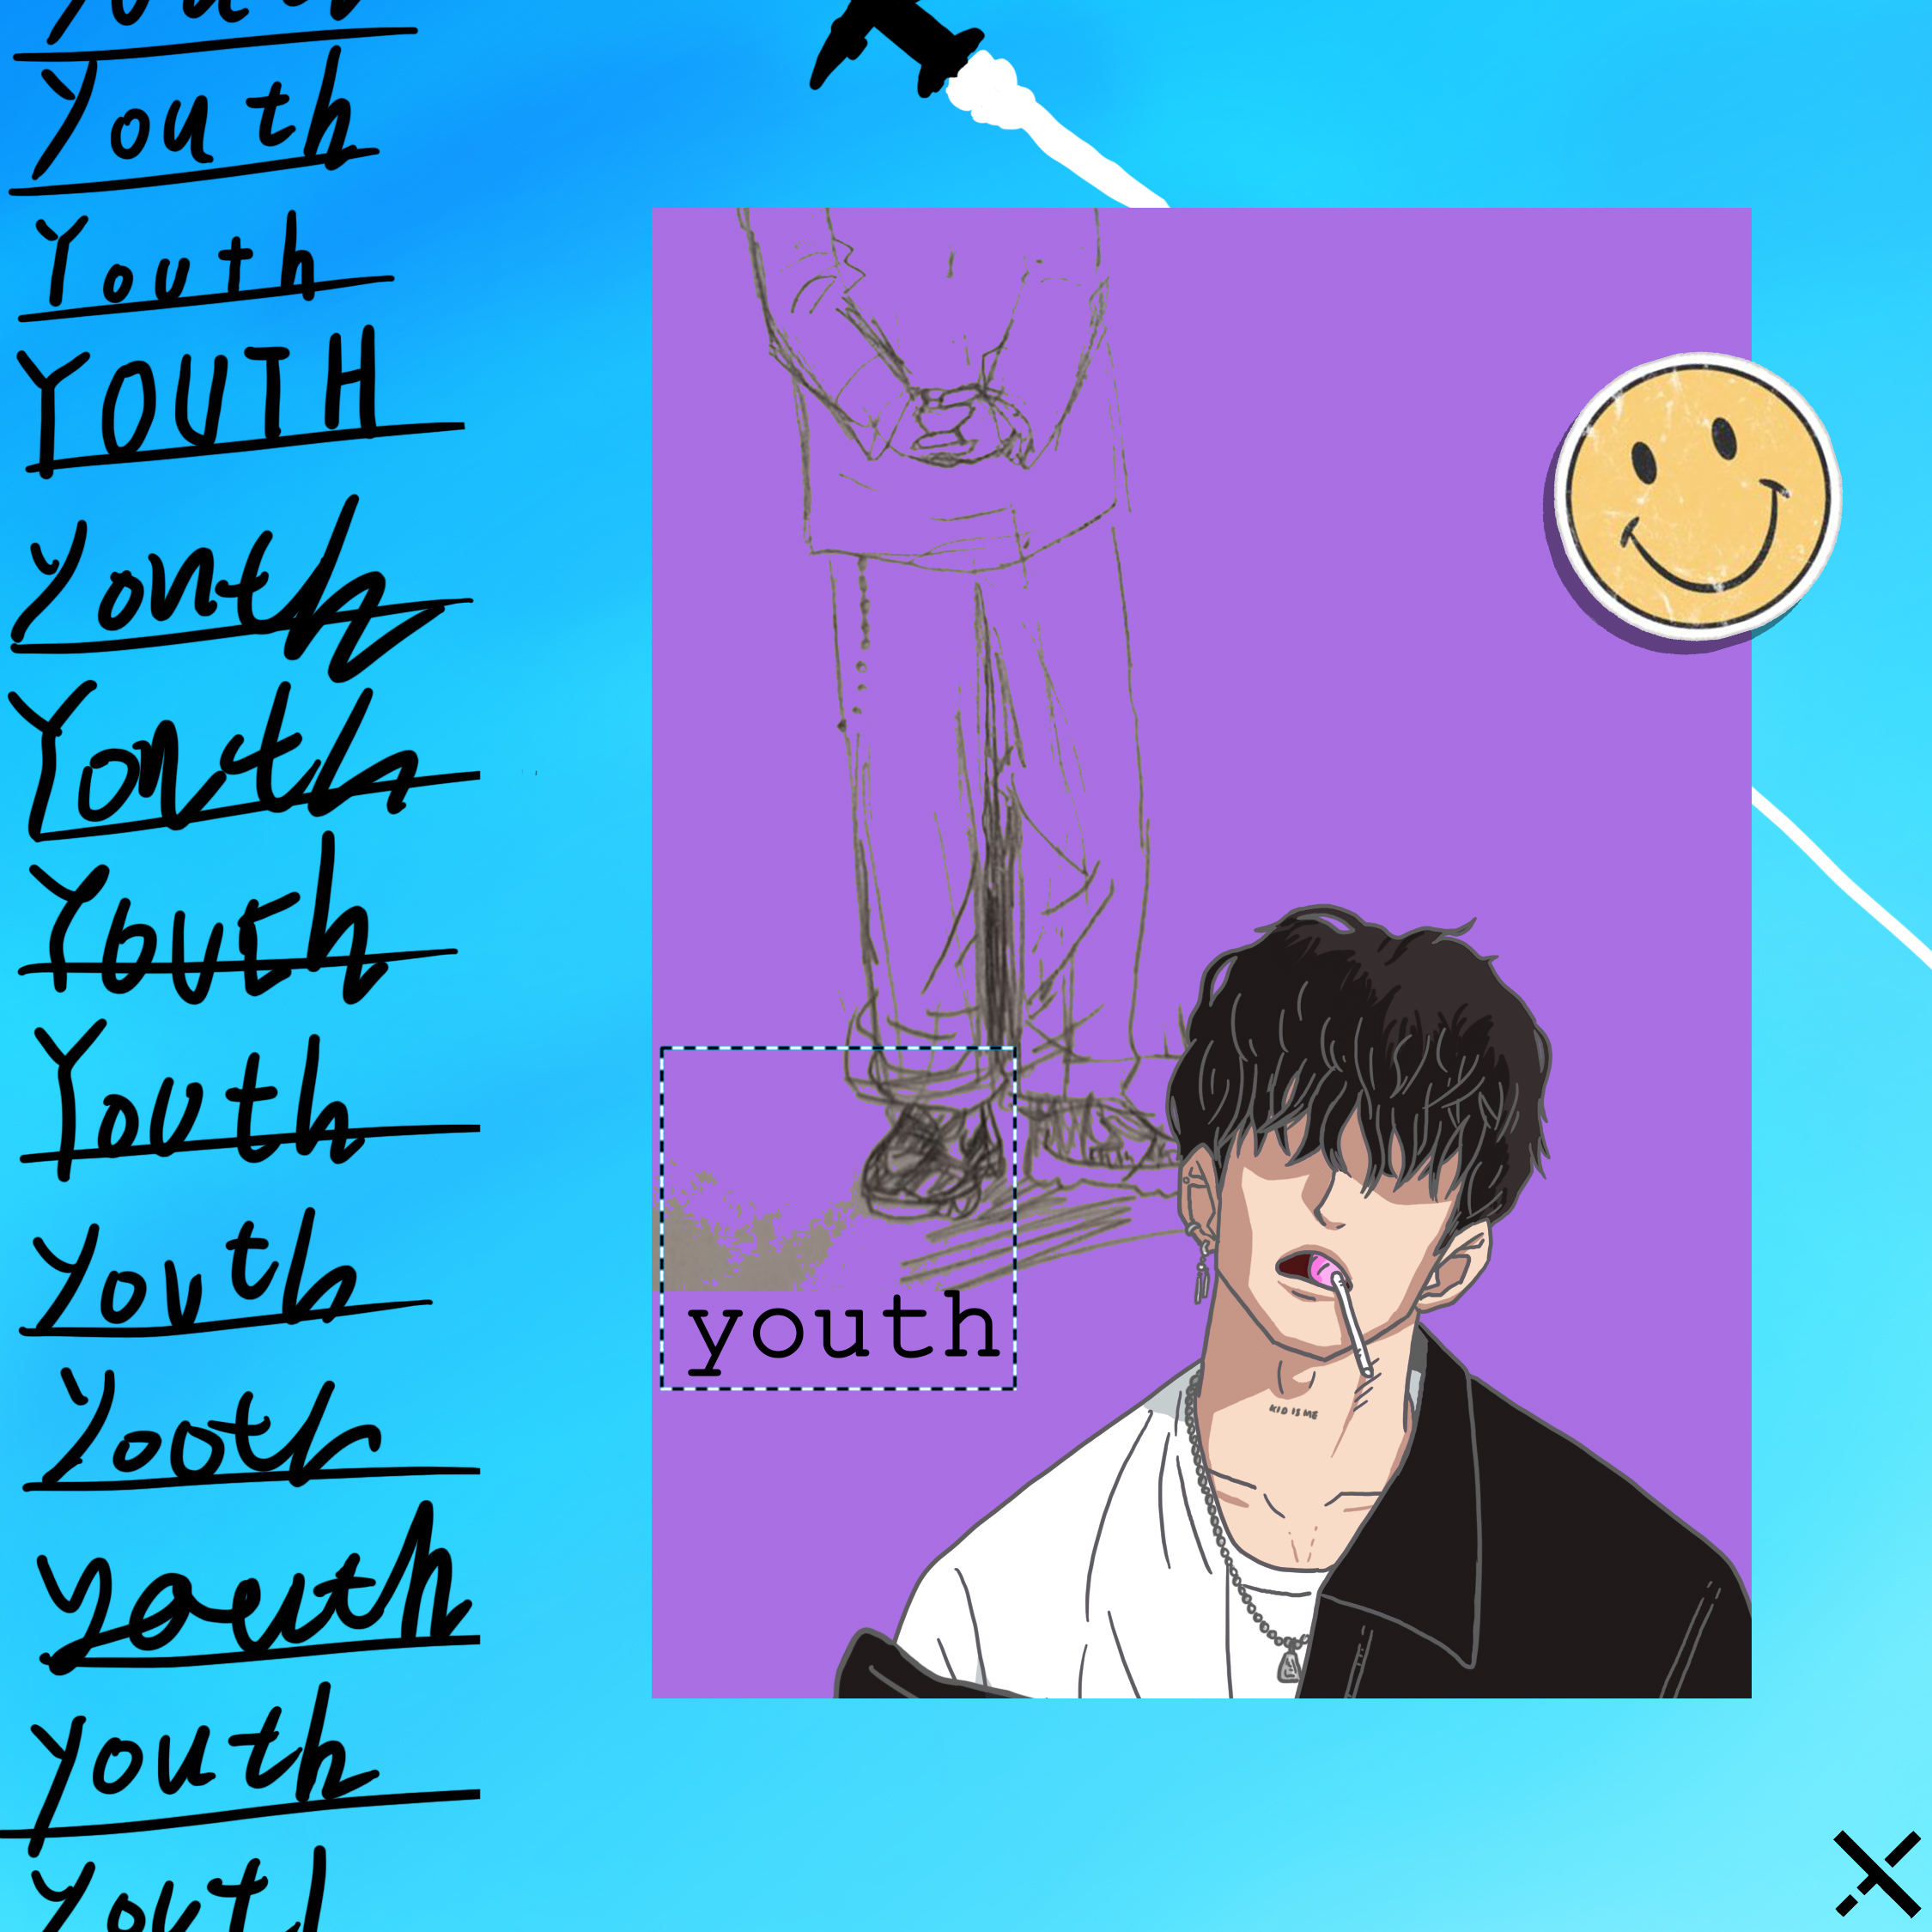 20181029(youth).jpg : youth